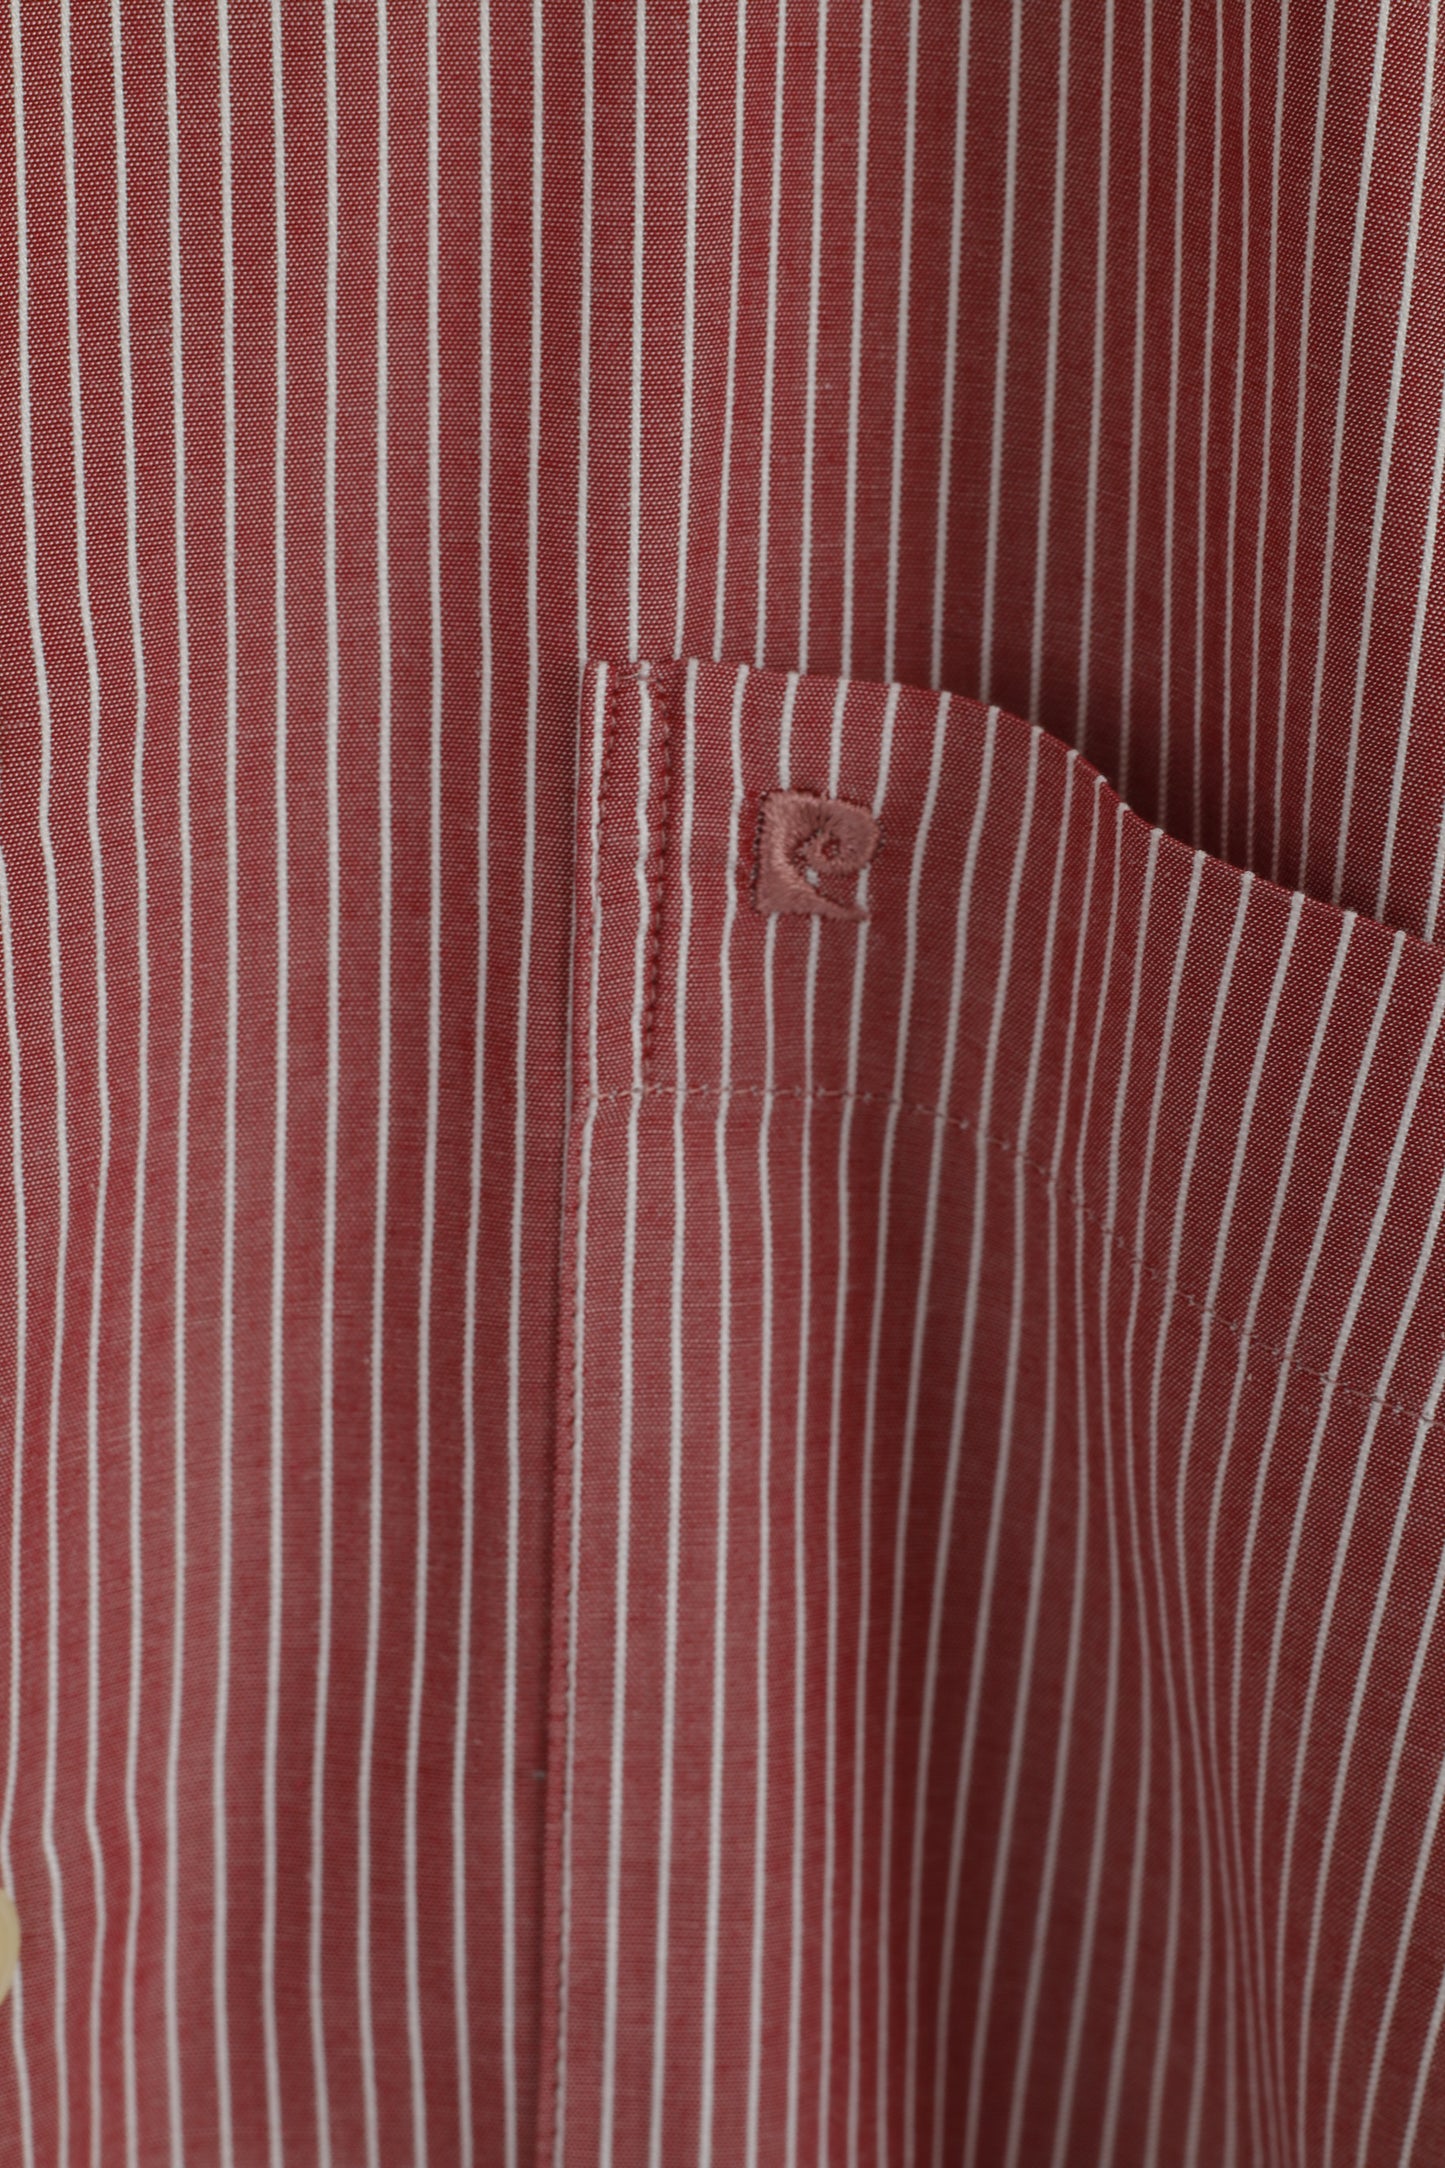 Pierre Cardin Men 42 L Casual Shirt Maroon Cotton Striped Long Sleeve Top